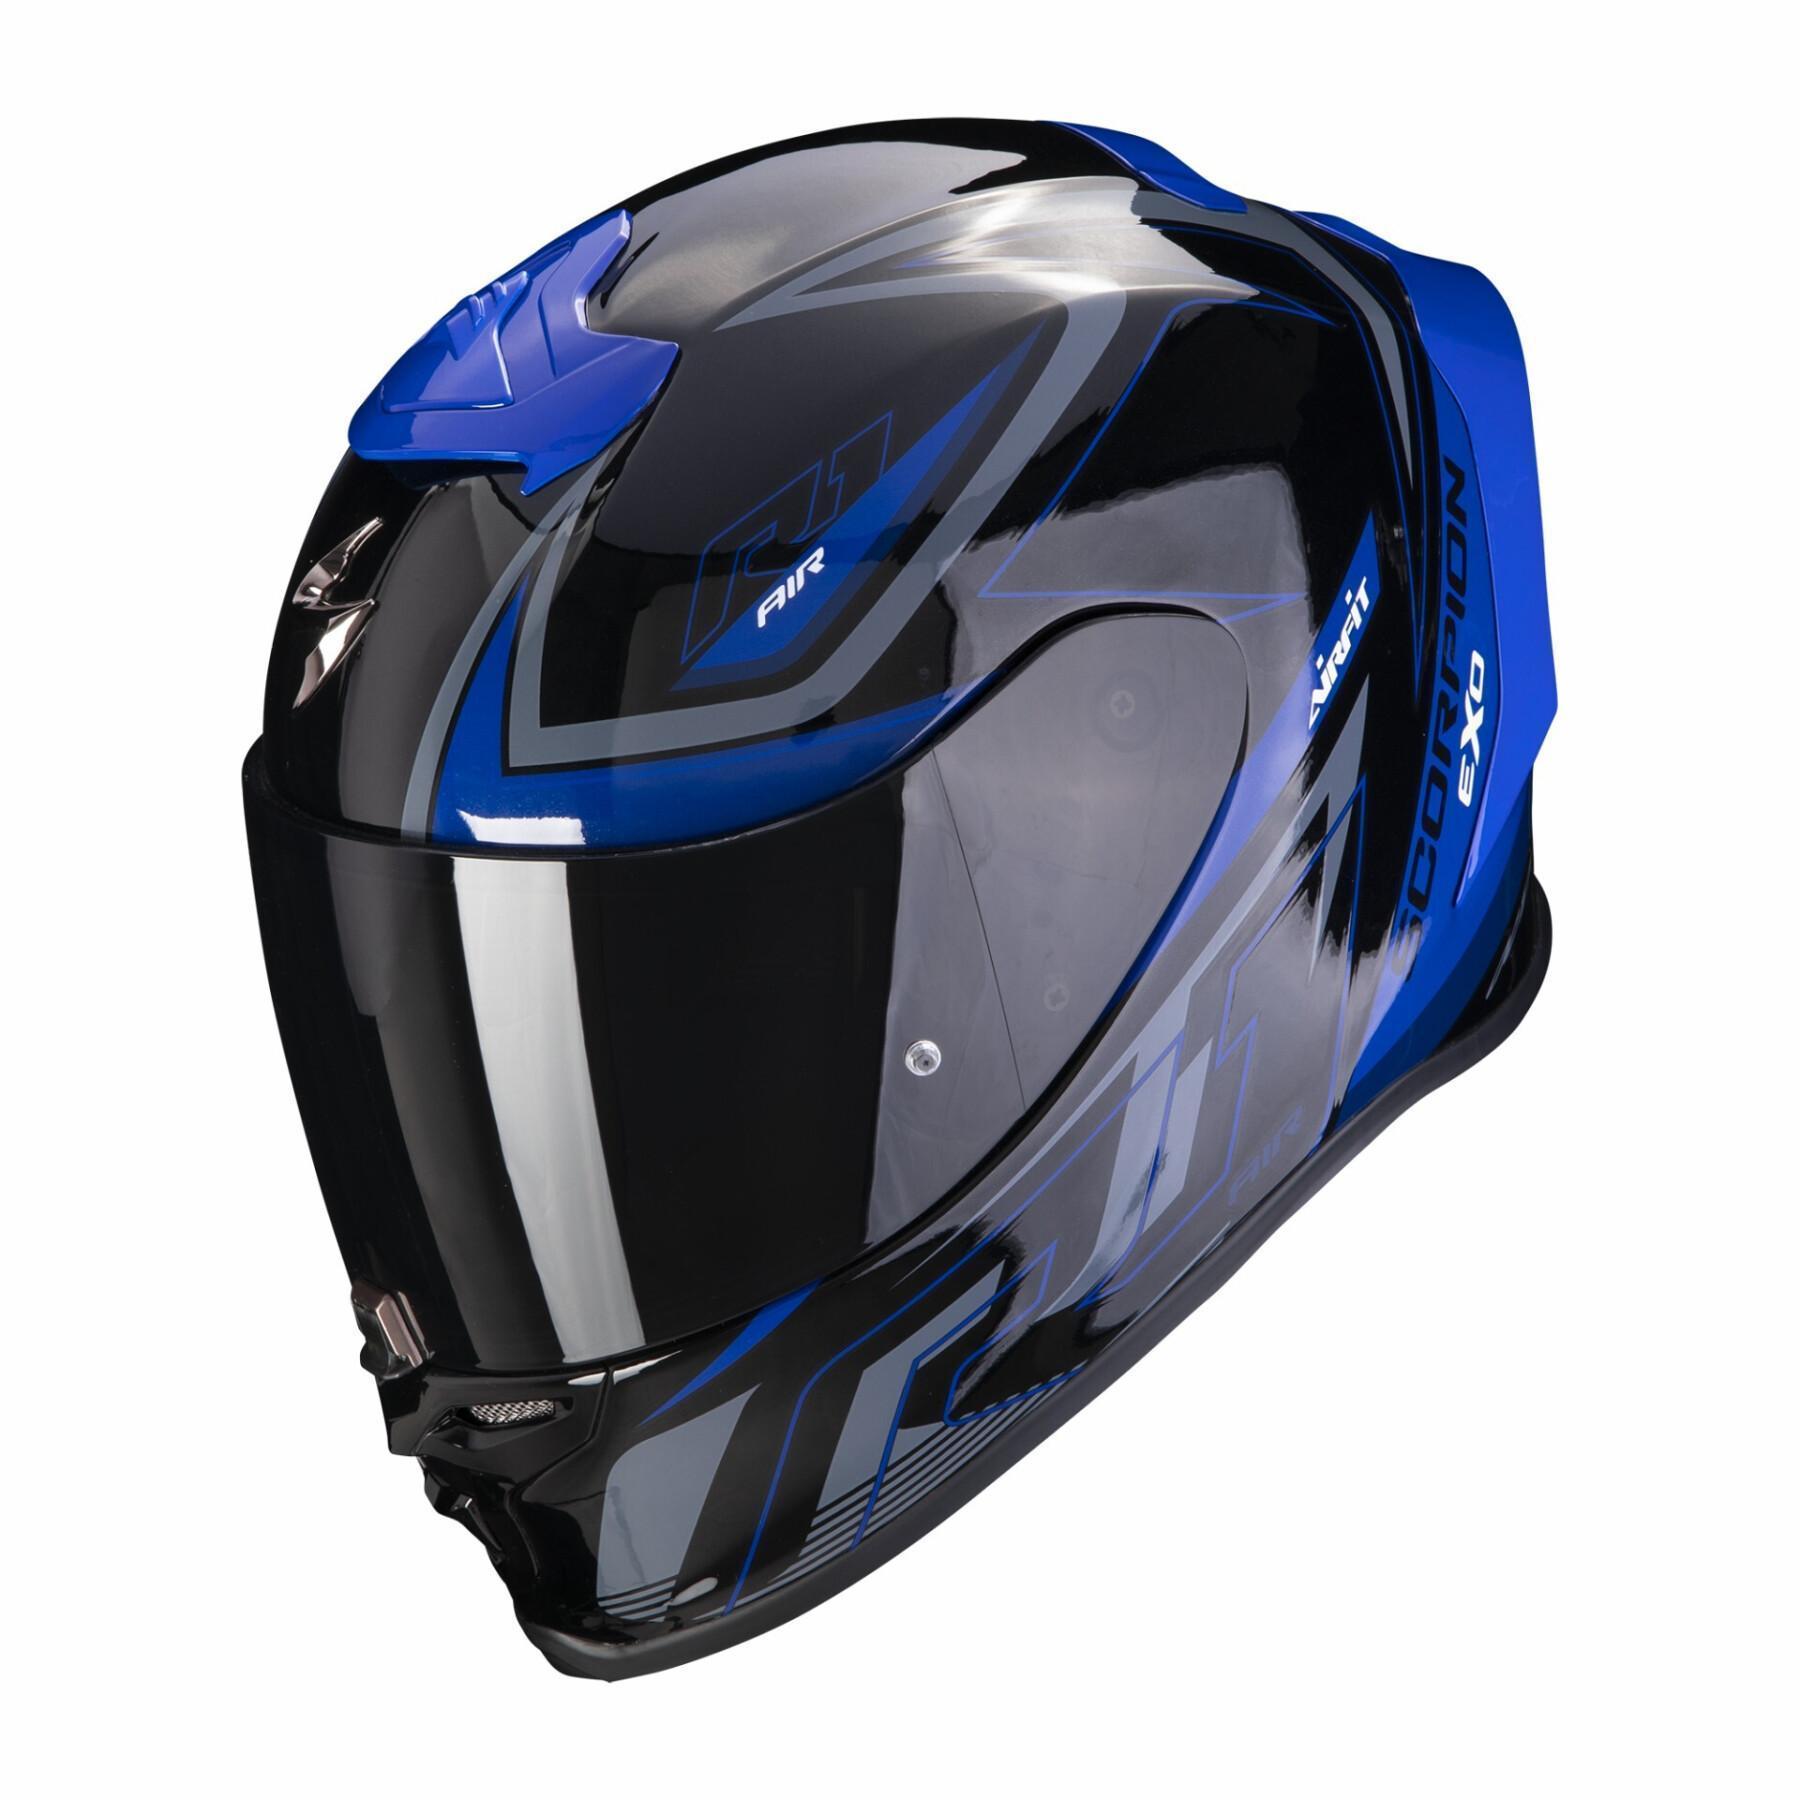 Full face motorcycle helmet Scorpion Exo-R1 Evo Air GAZ ECE 22-06